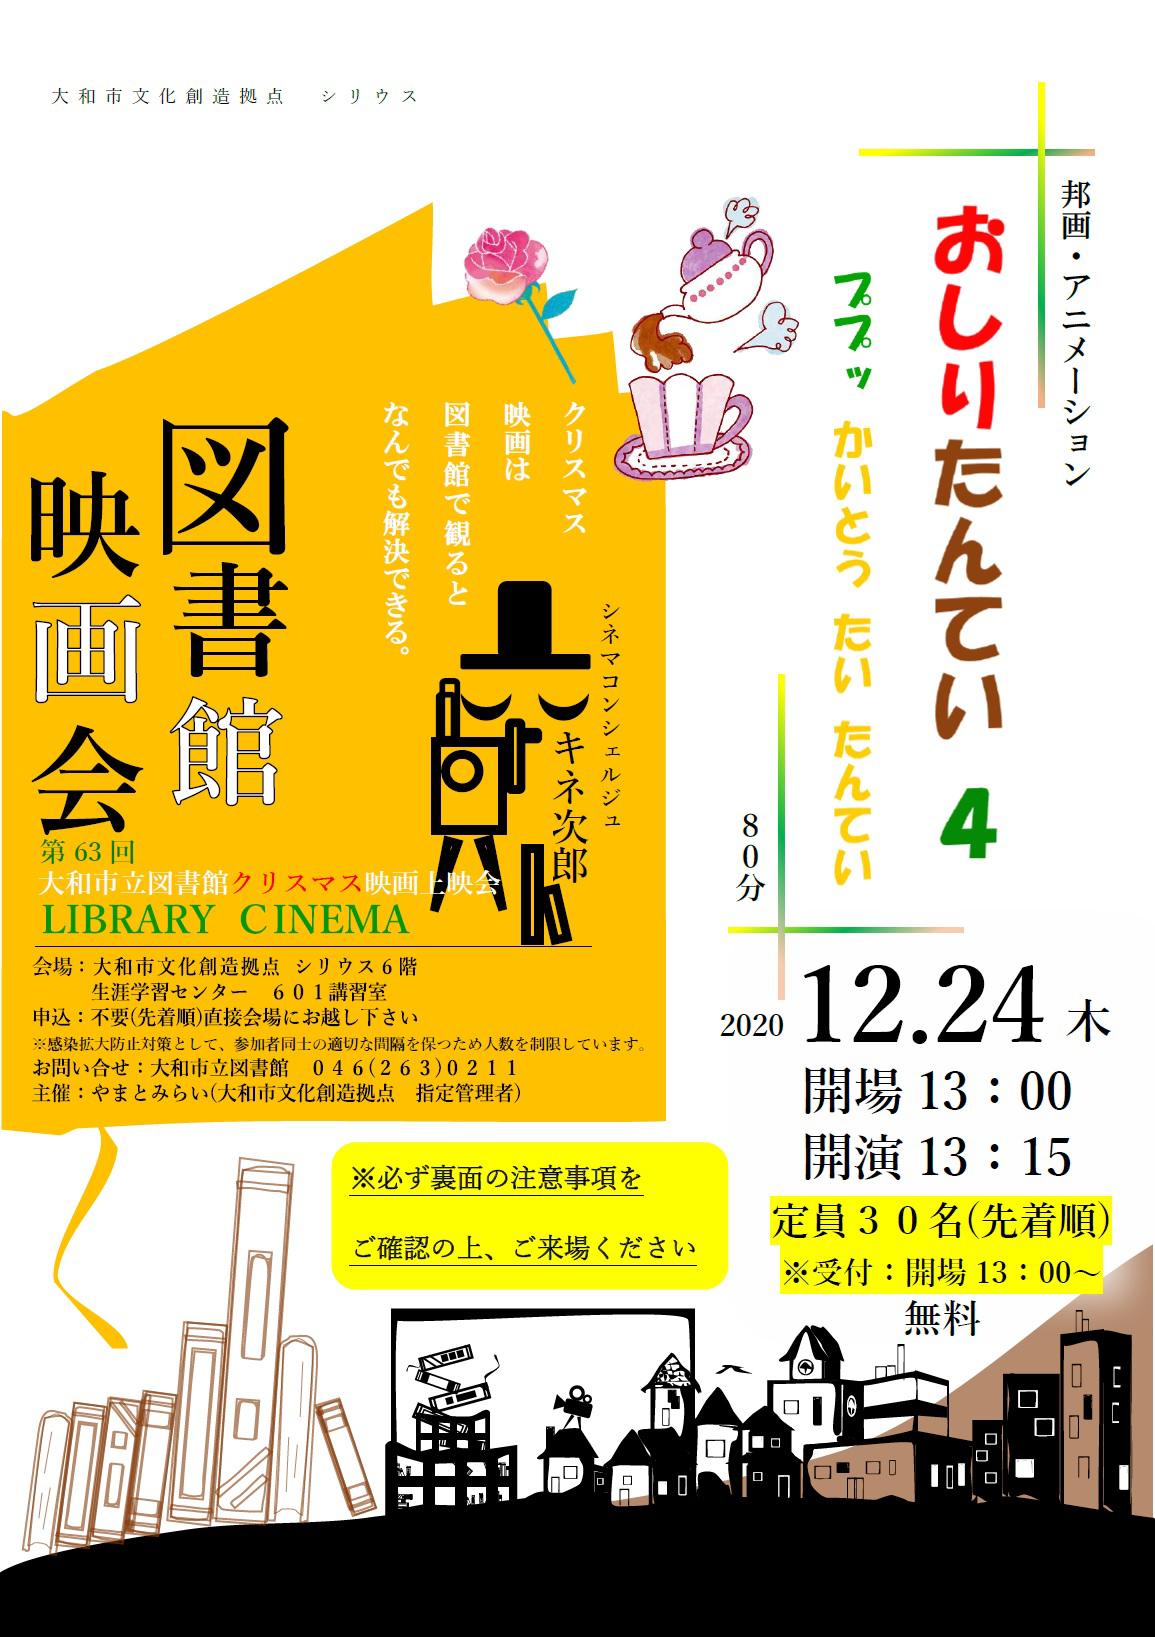 LIBRARY CINEMA第63回 大和市立図書館クリスマス映画上映会「おしりたんてい4 ププッ かいとう たい たんてい」